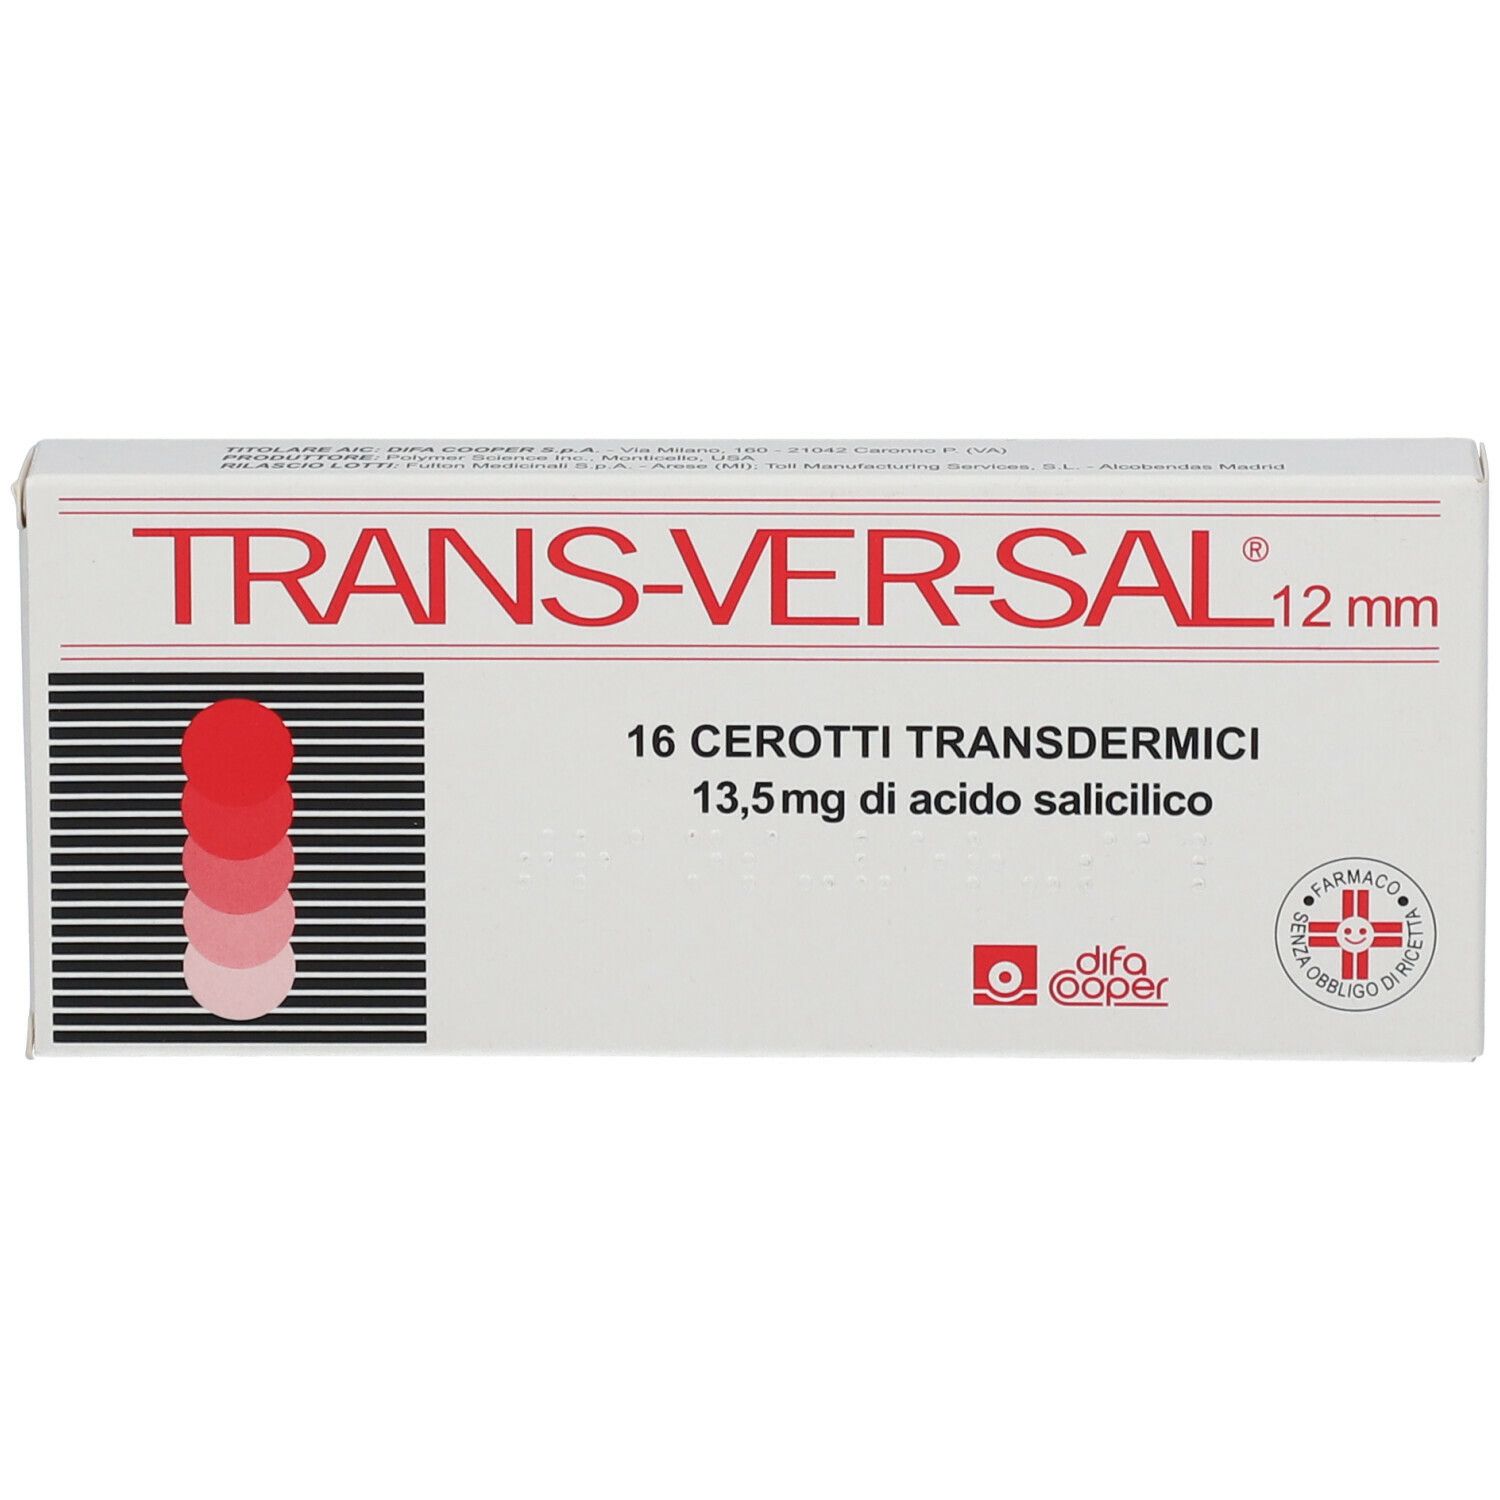 TRANS-VER-SAL® 16 Cerotti Transdermici 13,5 mg 12 mm